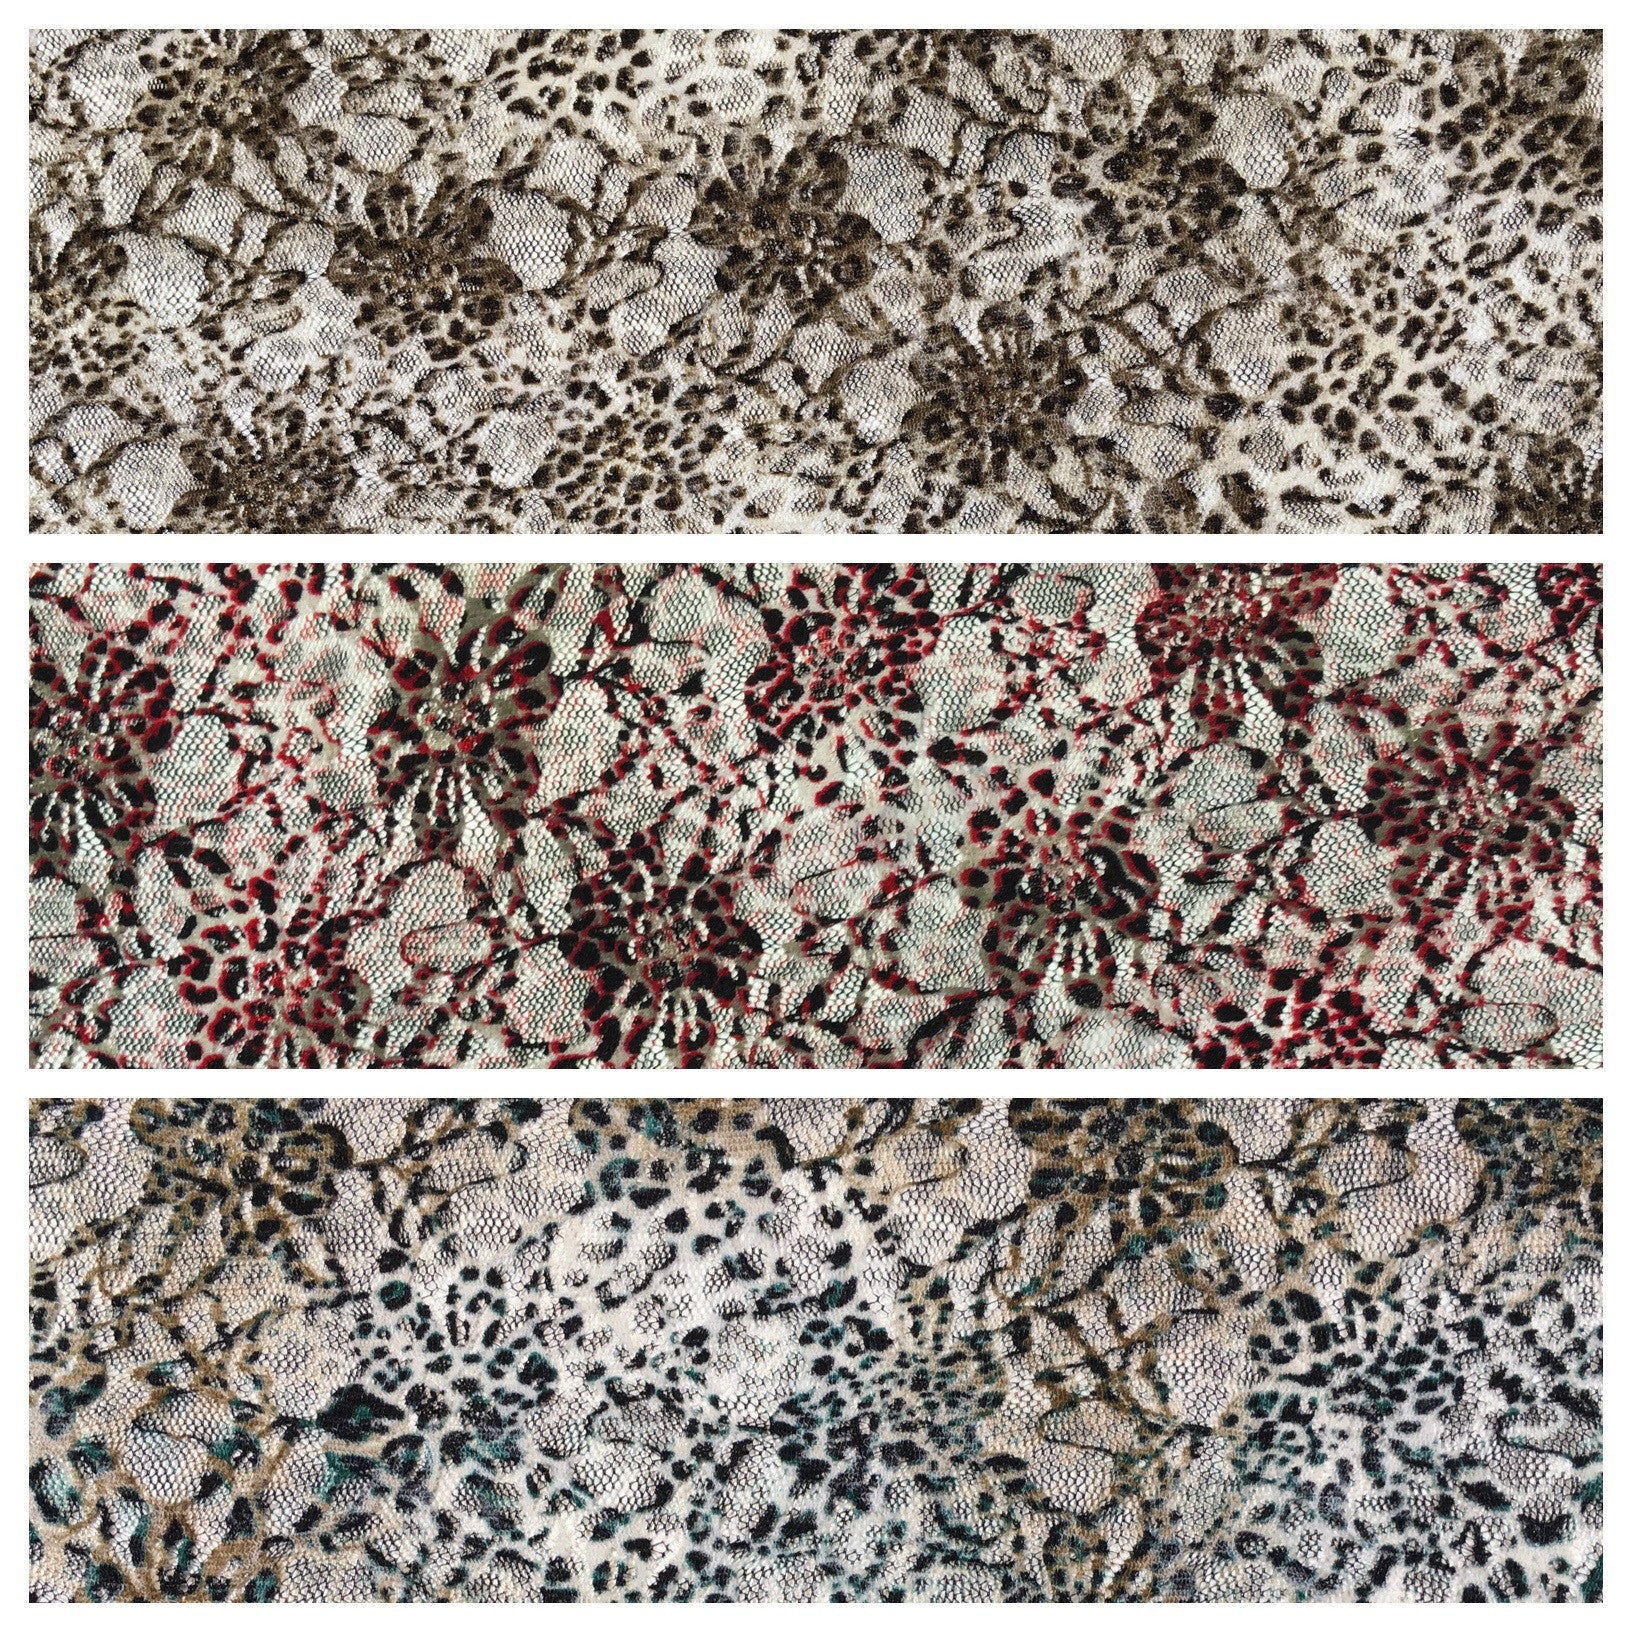 Animal snake printed raschel stretch lace dress fabric 55" Wide M646 Mtex - Midland Textiles & Fabric